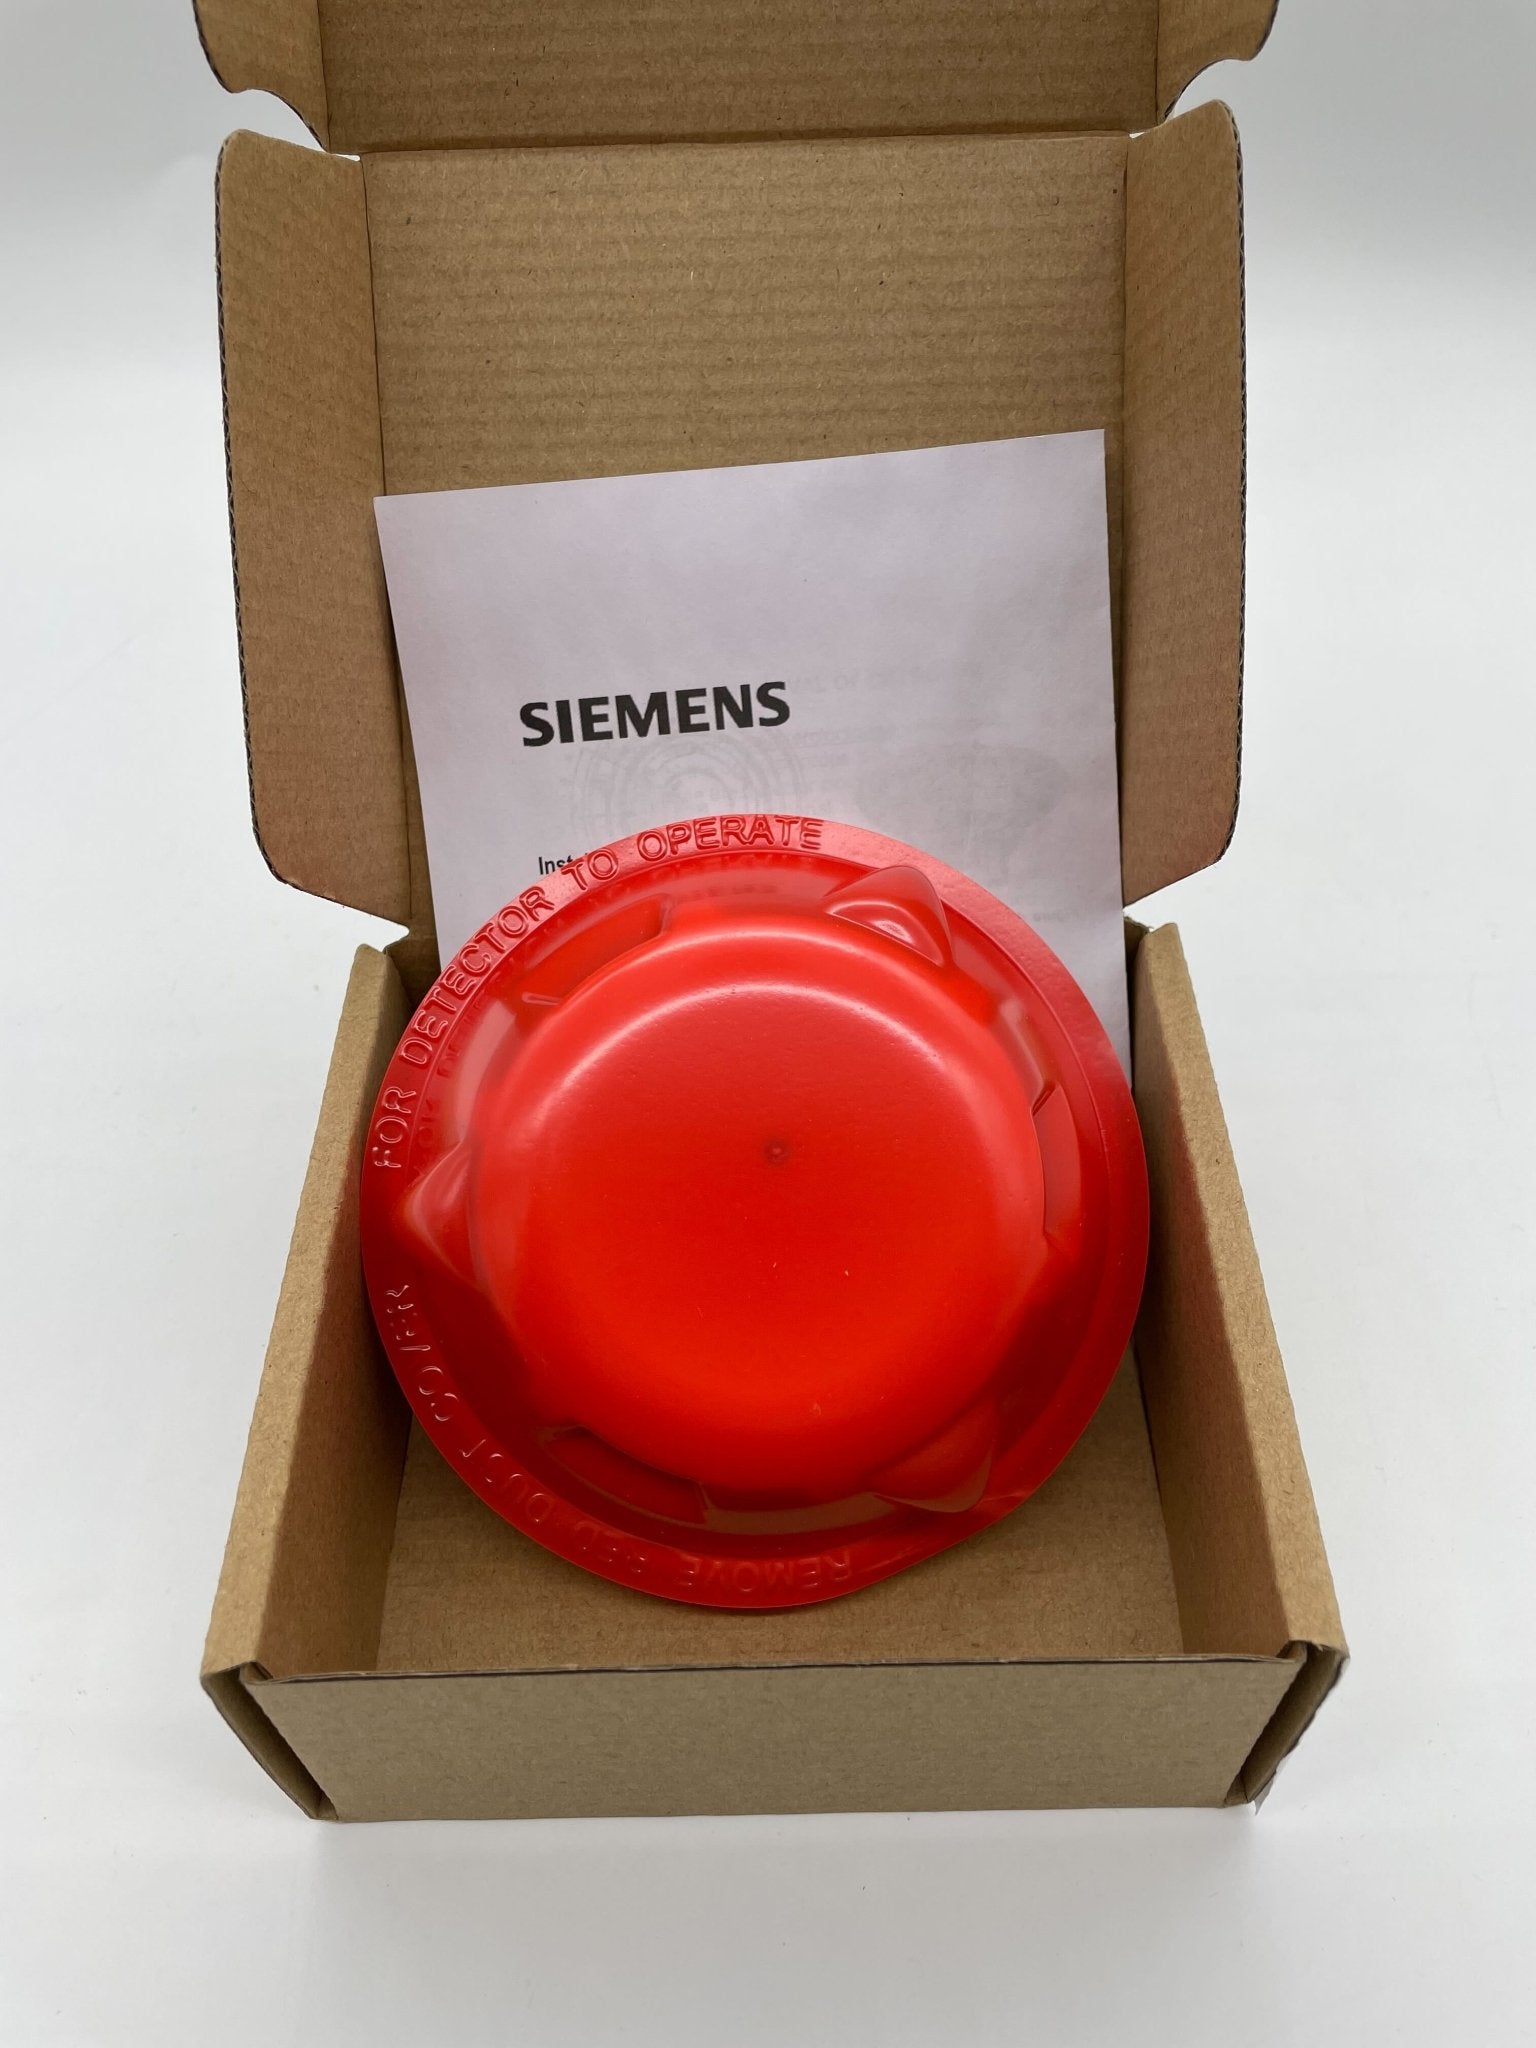 Siemens OP121 - The Fire Alarm Supplier